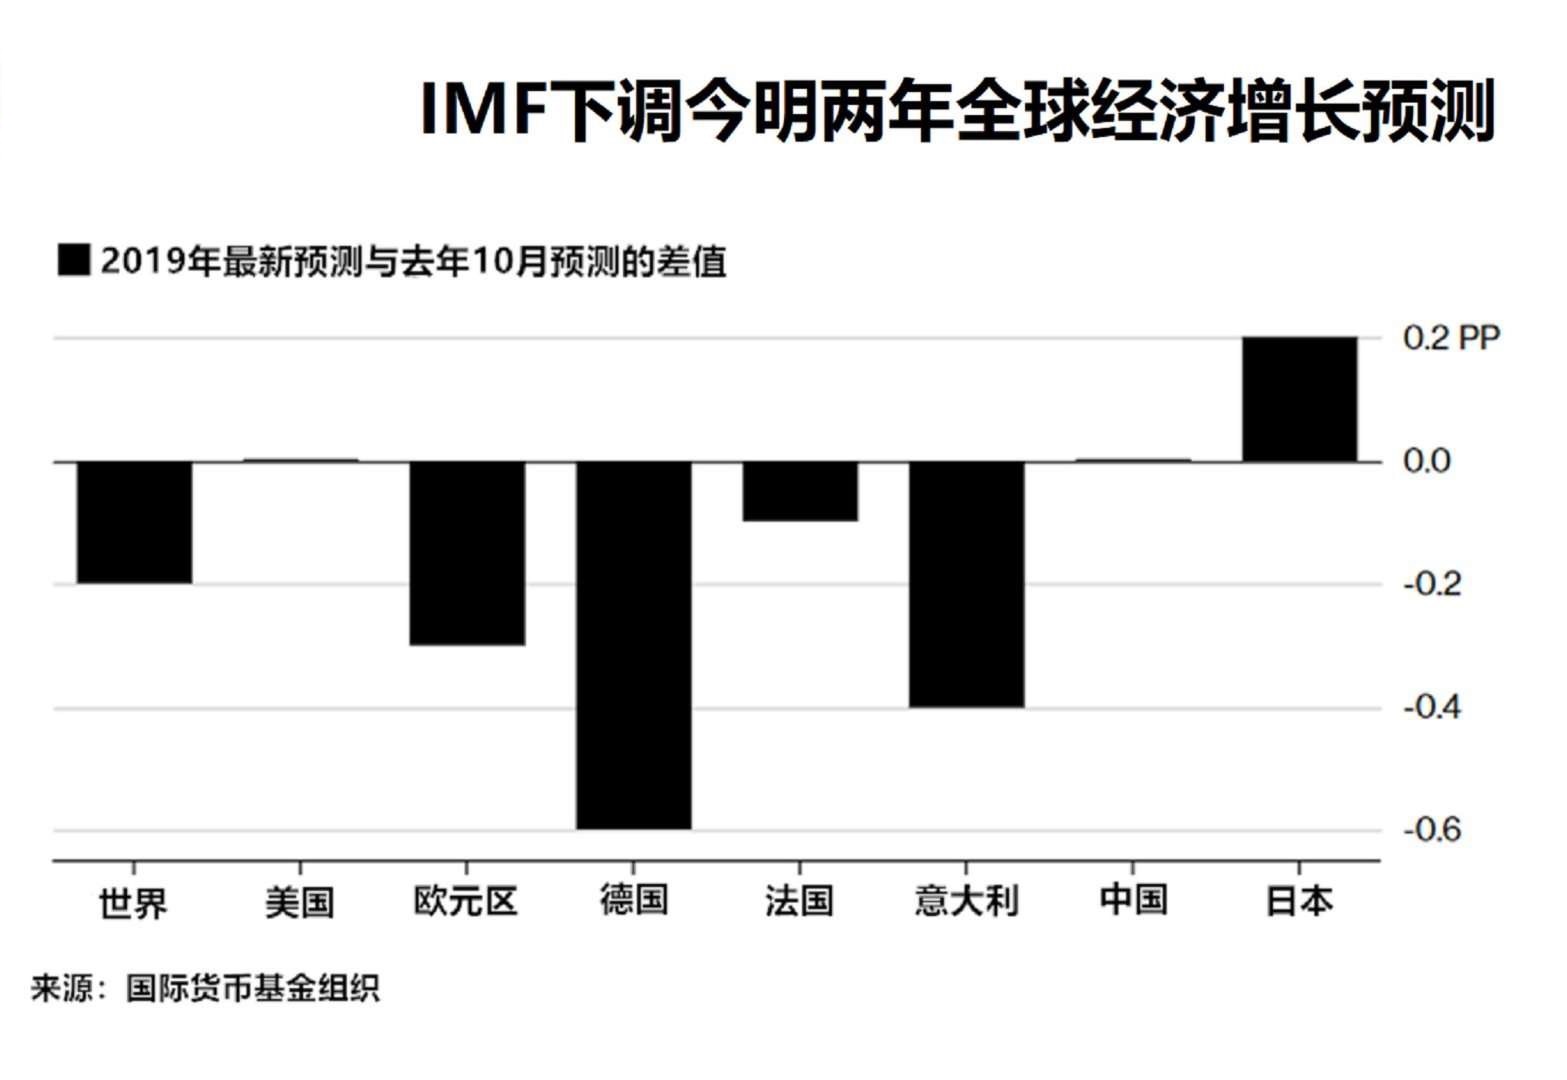 IMF将2019年世界增速预期下调至3.5%，为三年来最低